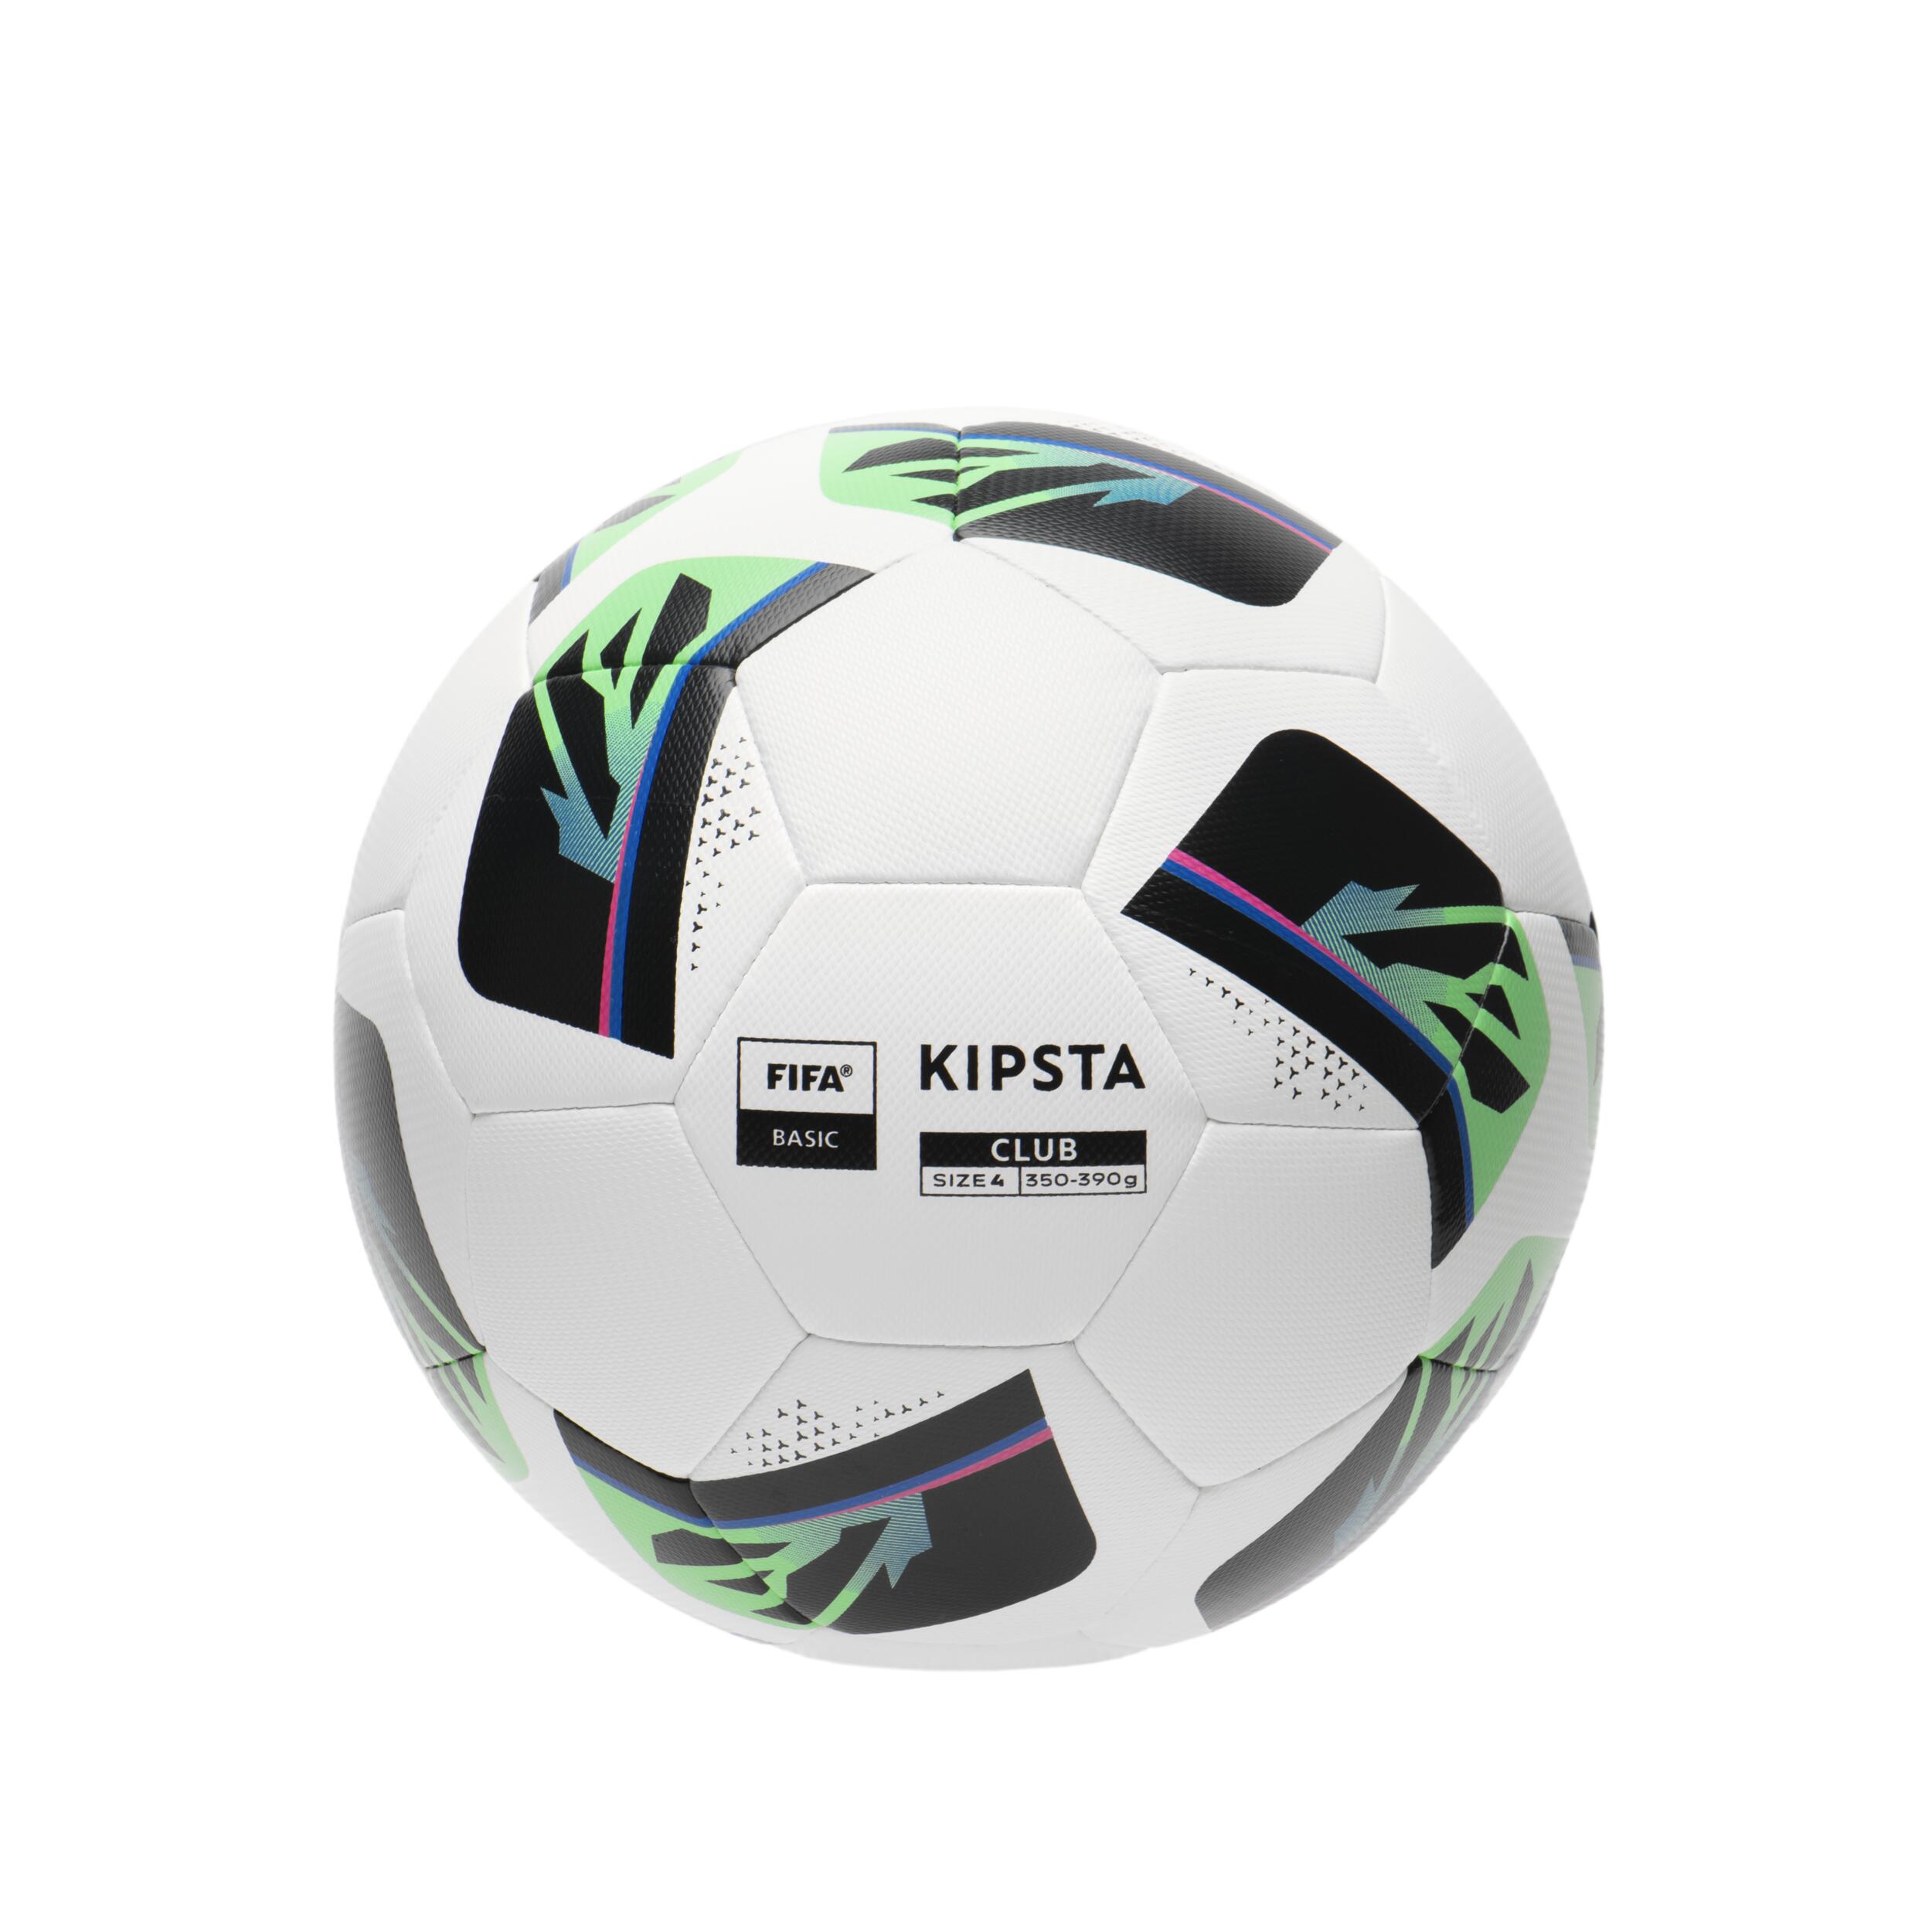 Size 4 FIFA Basic Soccer Ball - Club Hybrid